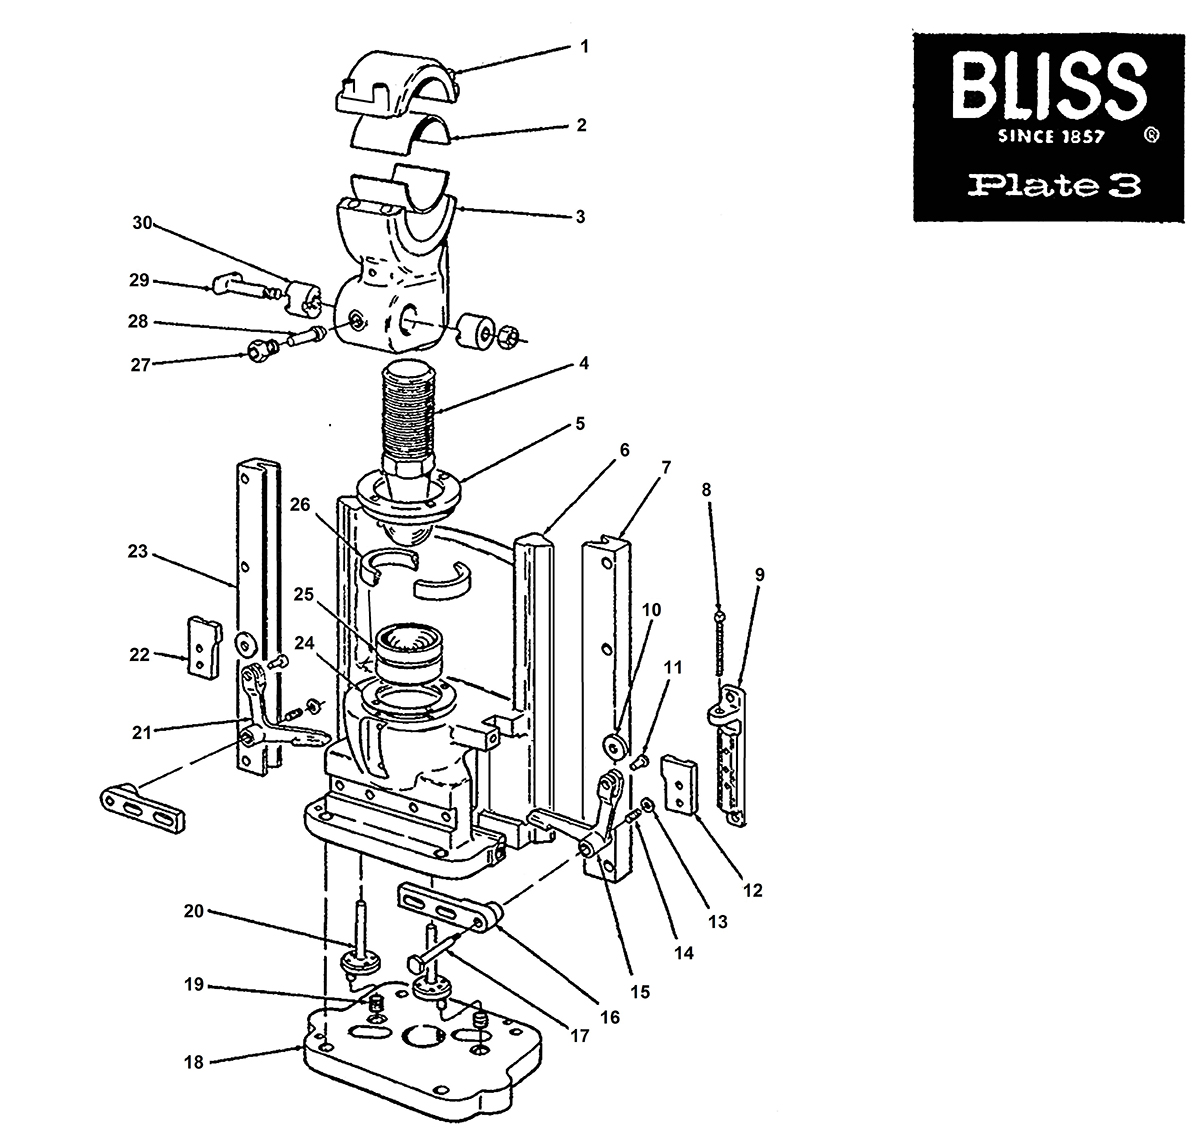 1831-Bliss-Plate-3